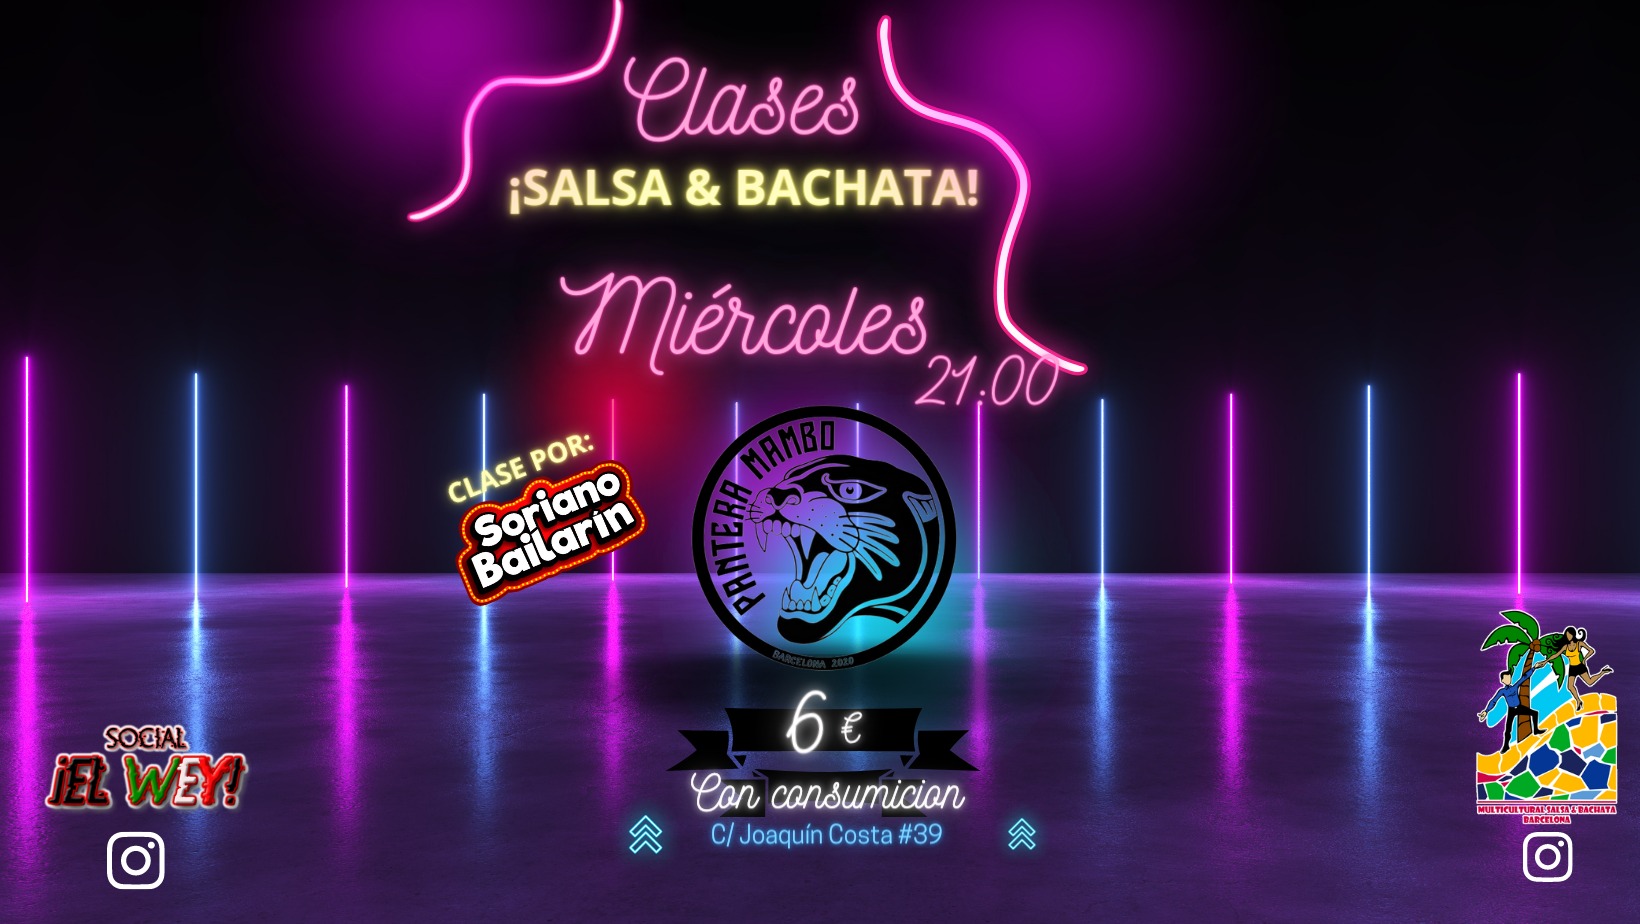 Clases de Salsa y Bachata en Pantera Mambo - Miércoles